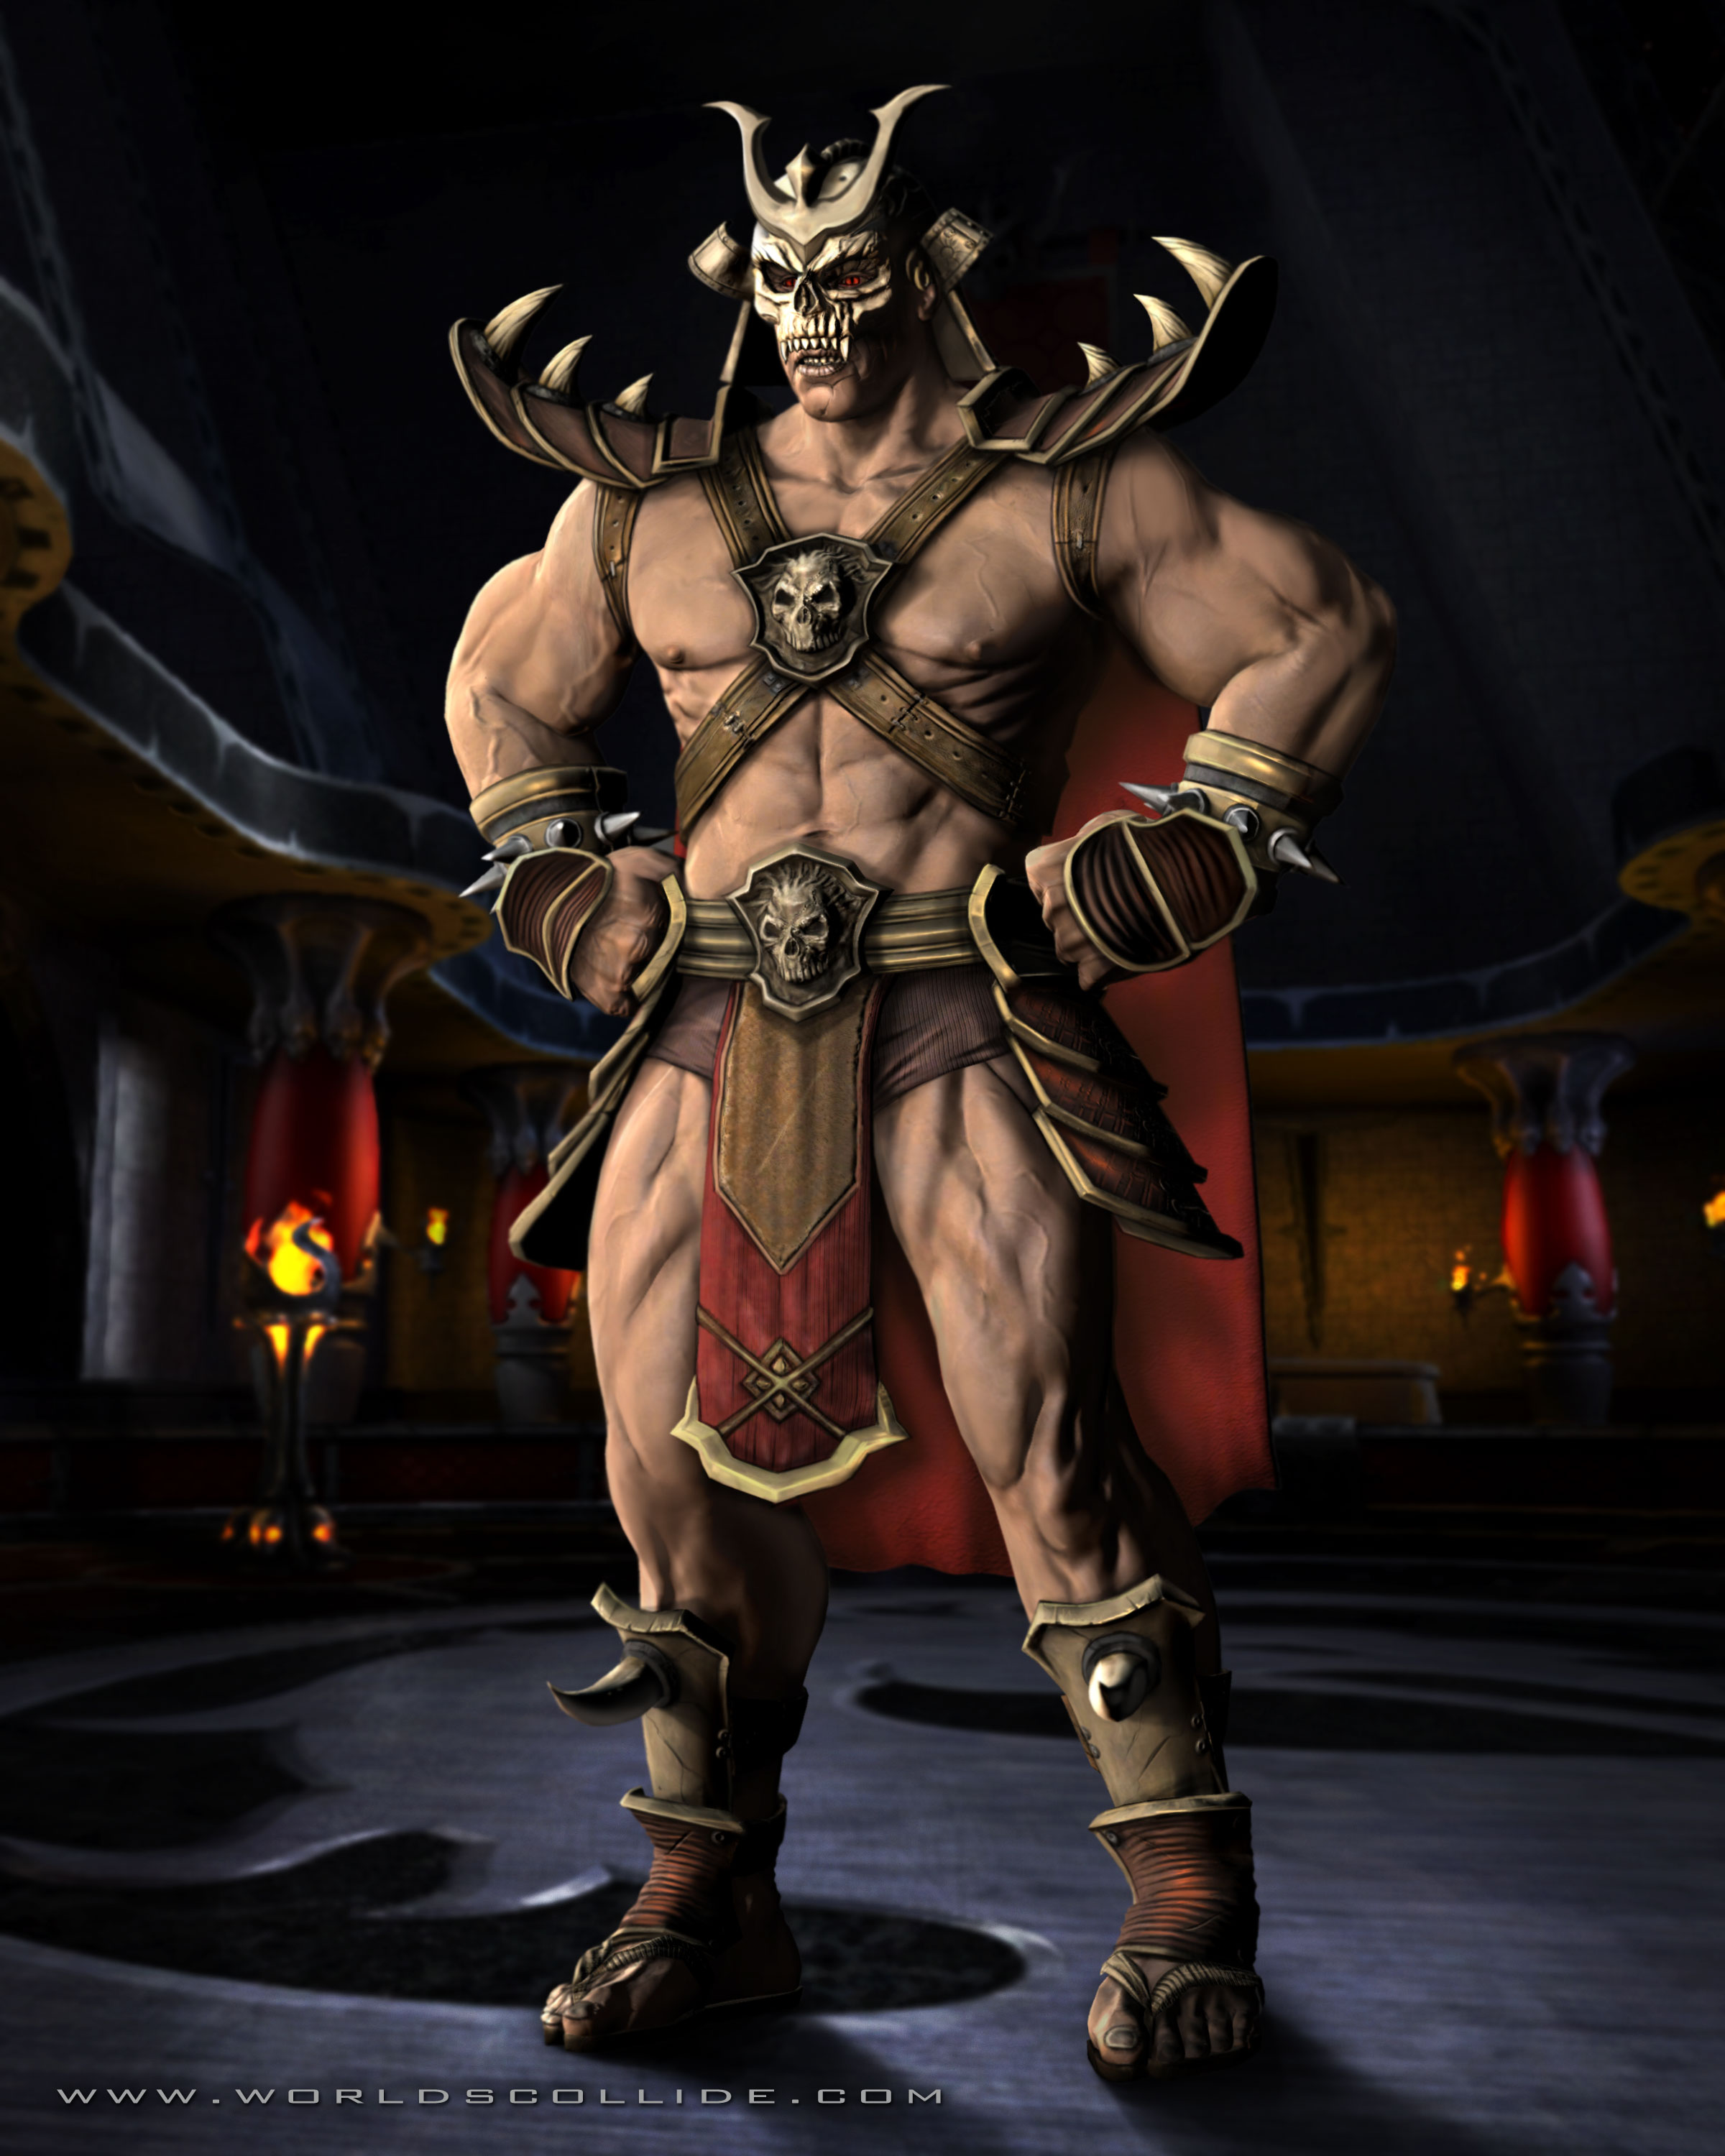 Mortal Kombat Ultimate, Obteniendo Traje de Shao Kahn, Liga de Kombate  Temporada 13